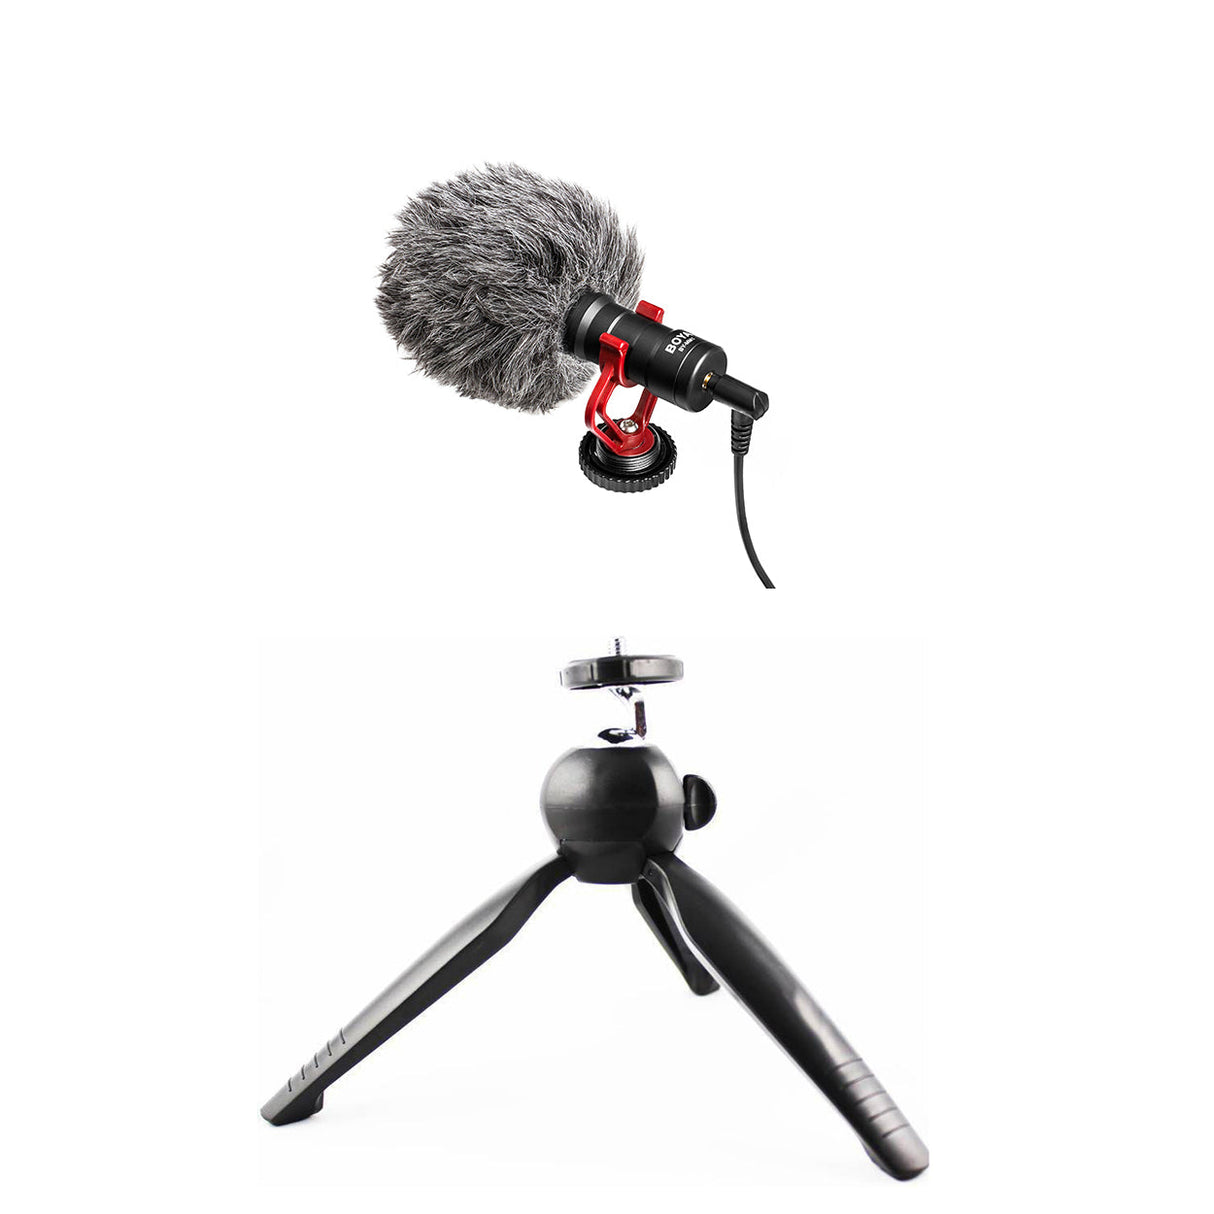 BOYA by-MM1 with Mini Tripod Universal Cardiod Shotgun Microphone